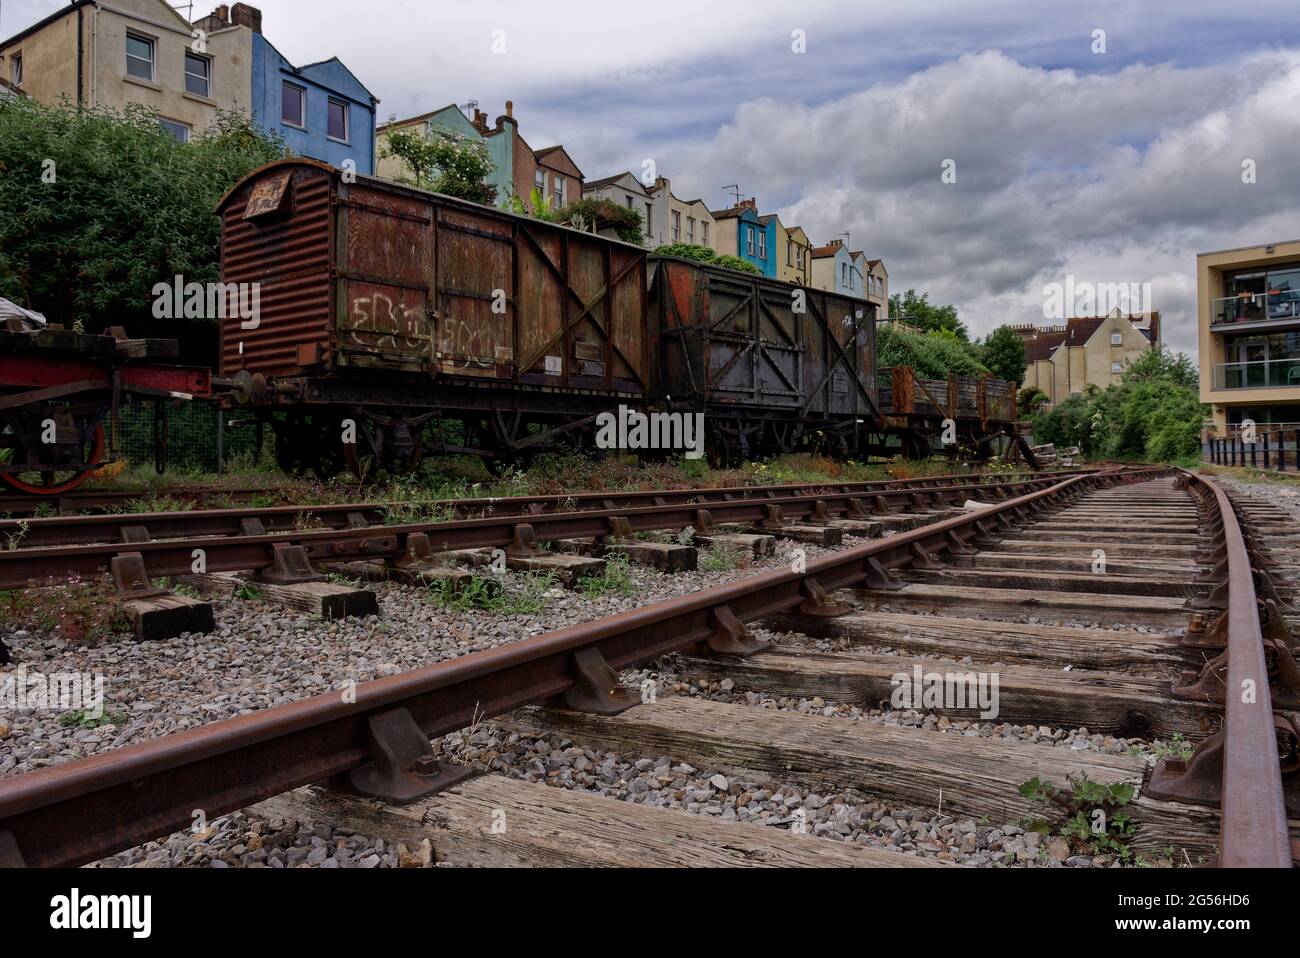 bristol harbourside railway Stock Photo